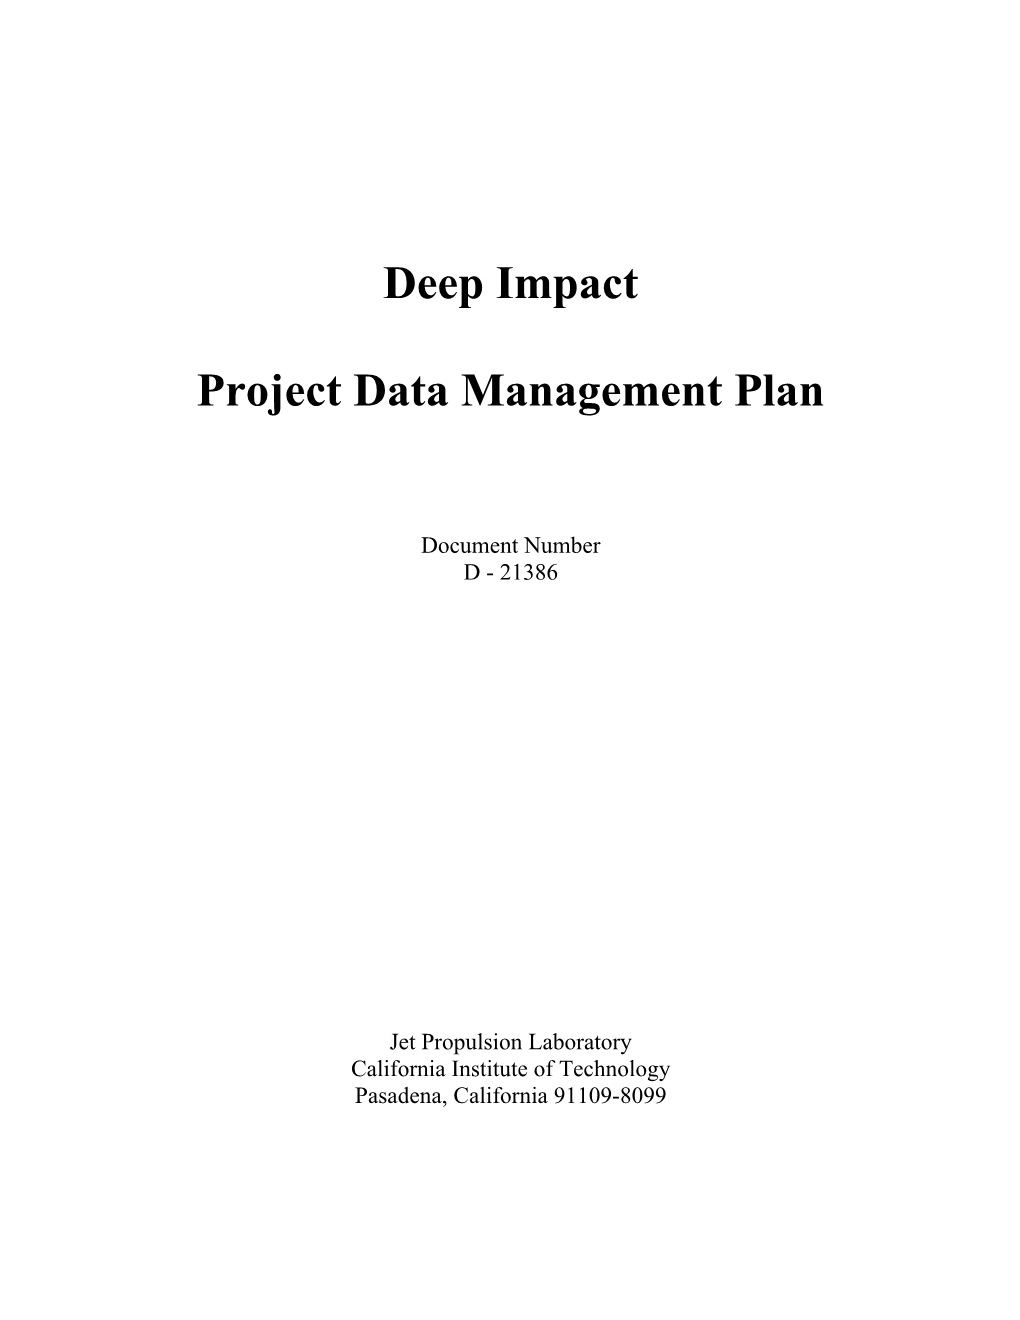 Deep Impact Project